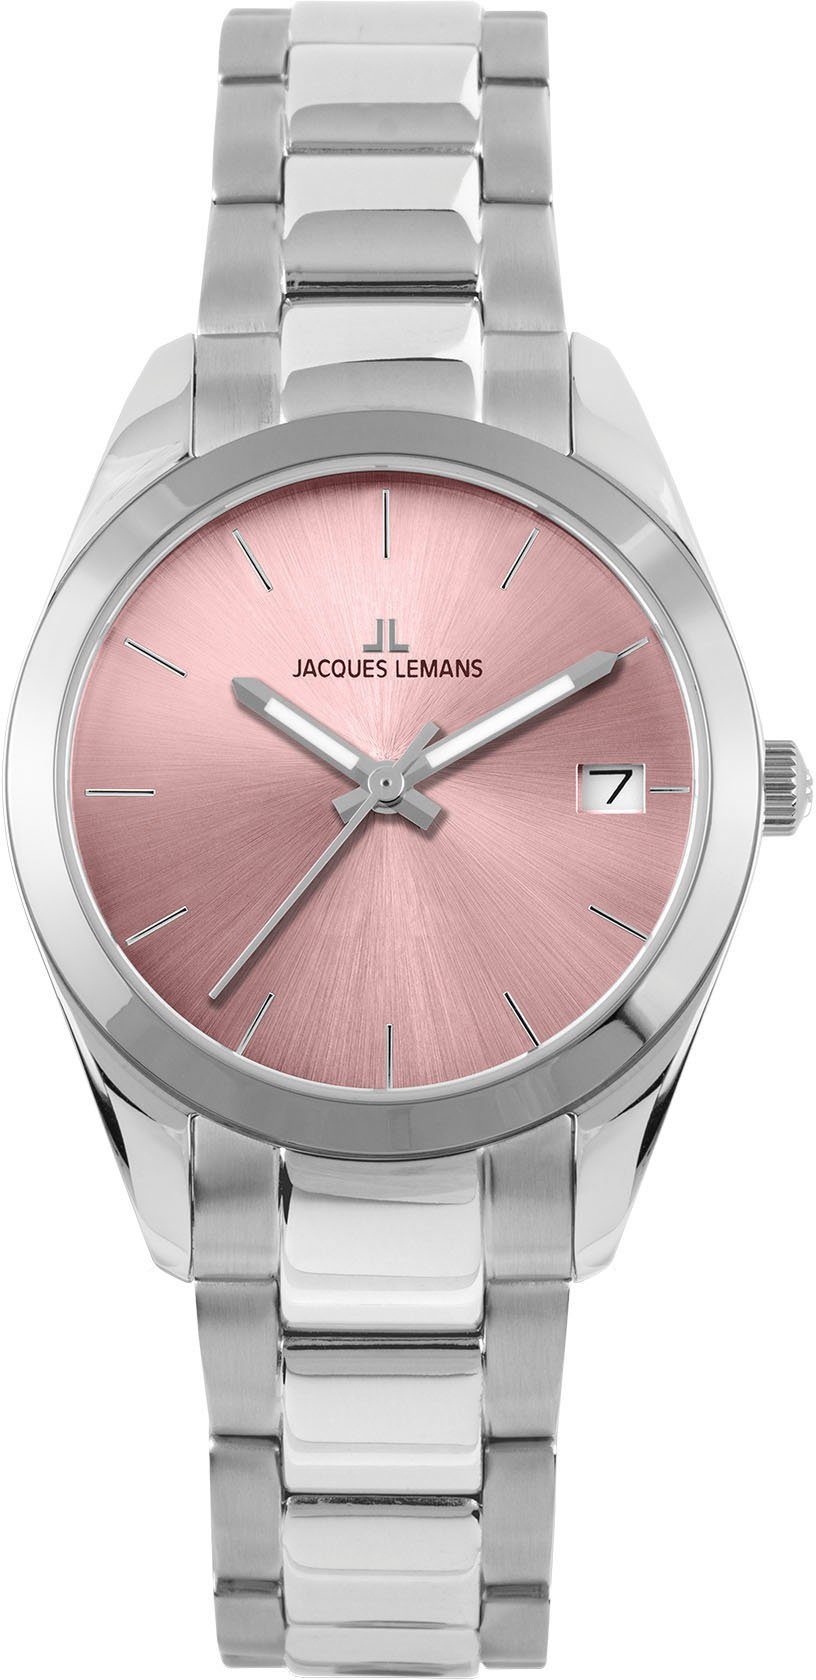 Jacques Lemans Uhren online kaufen | OTTO